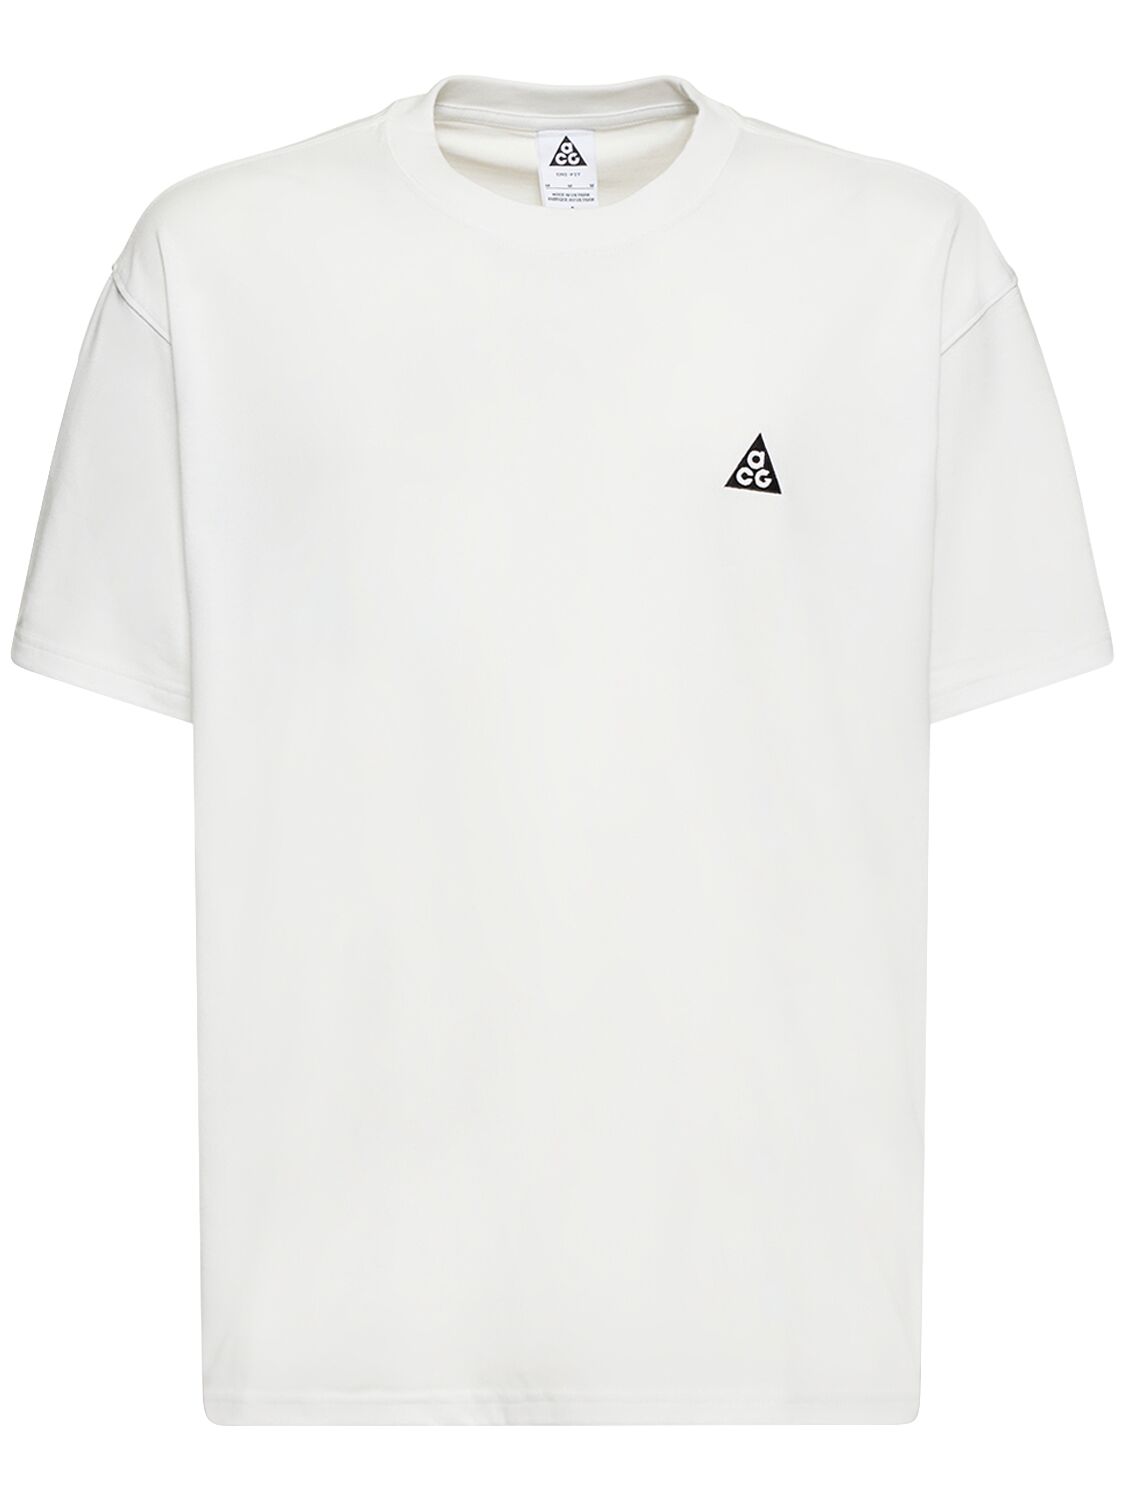 Image of Acg Cotton Blend T-shirt